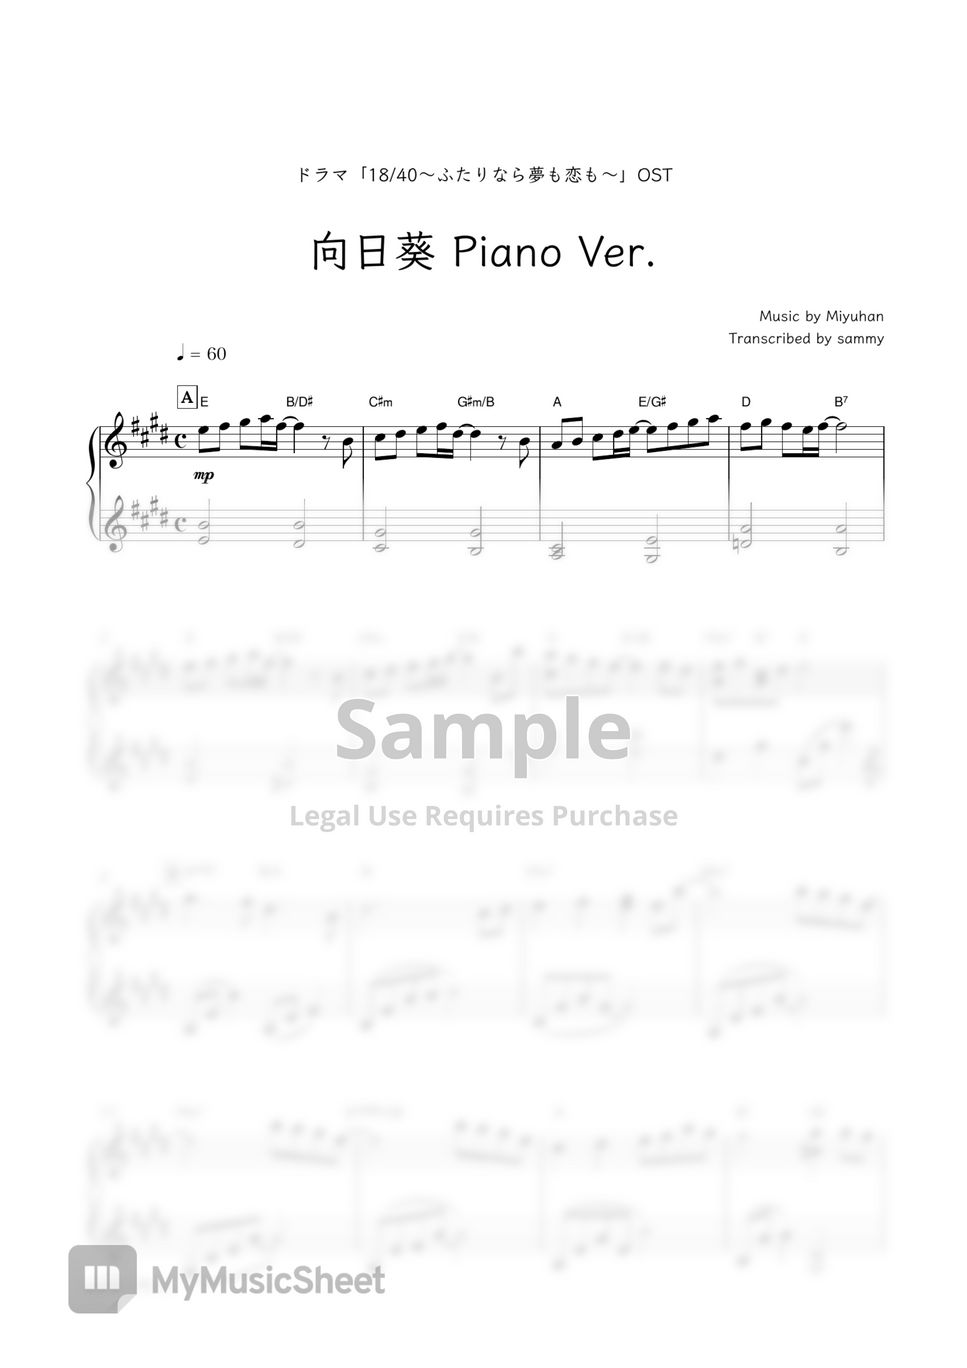 Ado・Japanese TV Series "18/40 - Futari nara Yume mo Koi mo - " OST - Himawari Piano ver. (向日葵 Piano ver.) by sammy